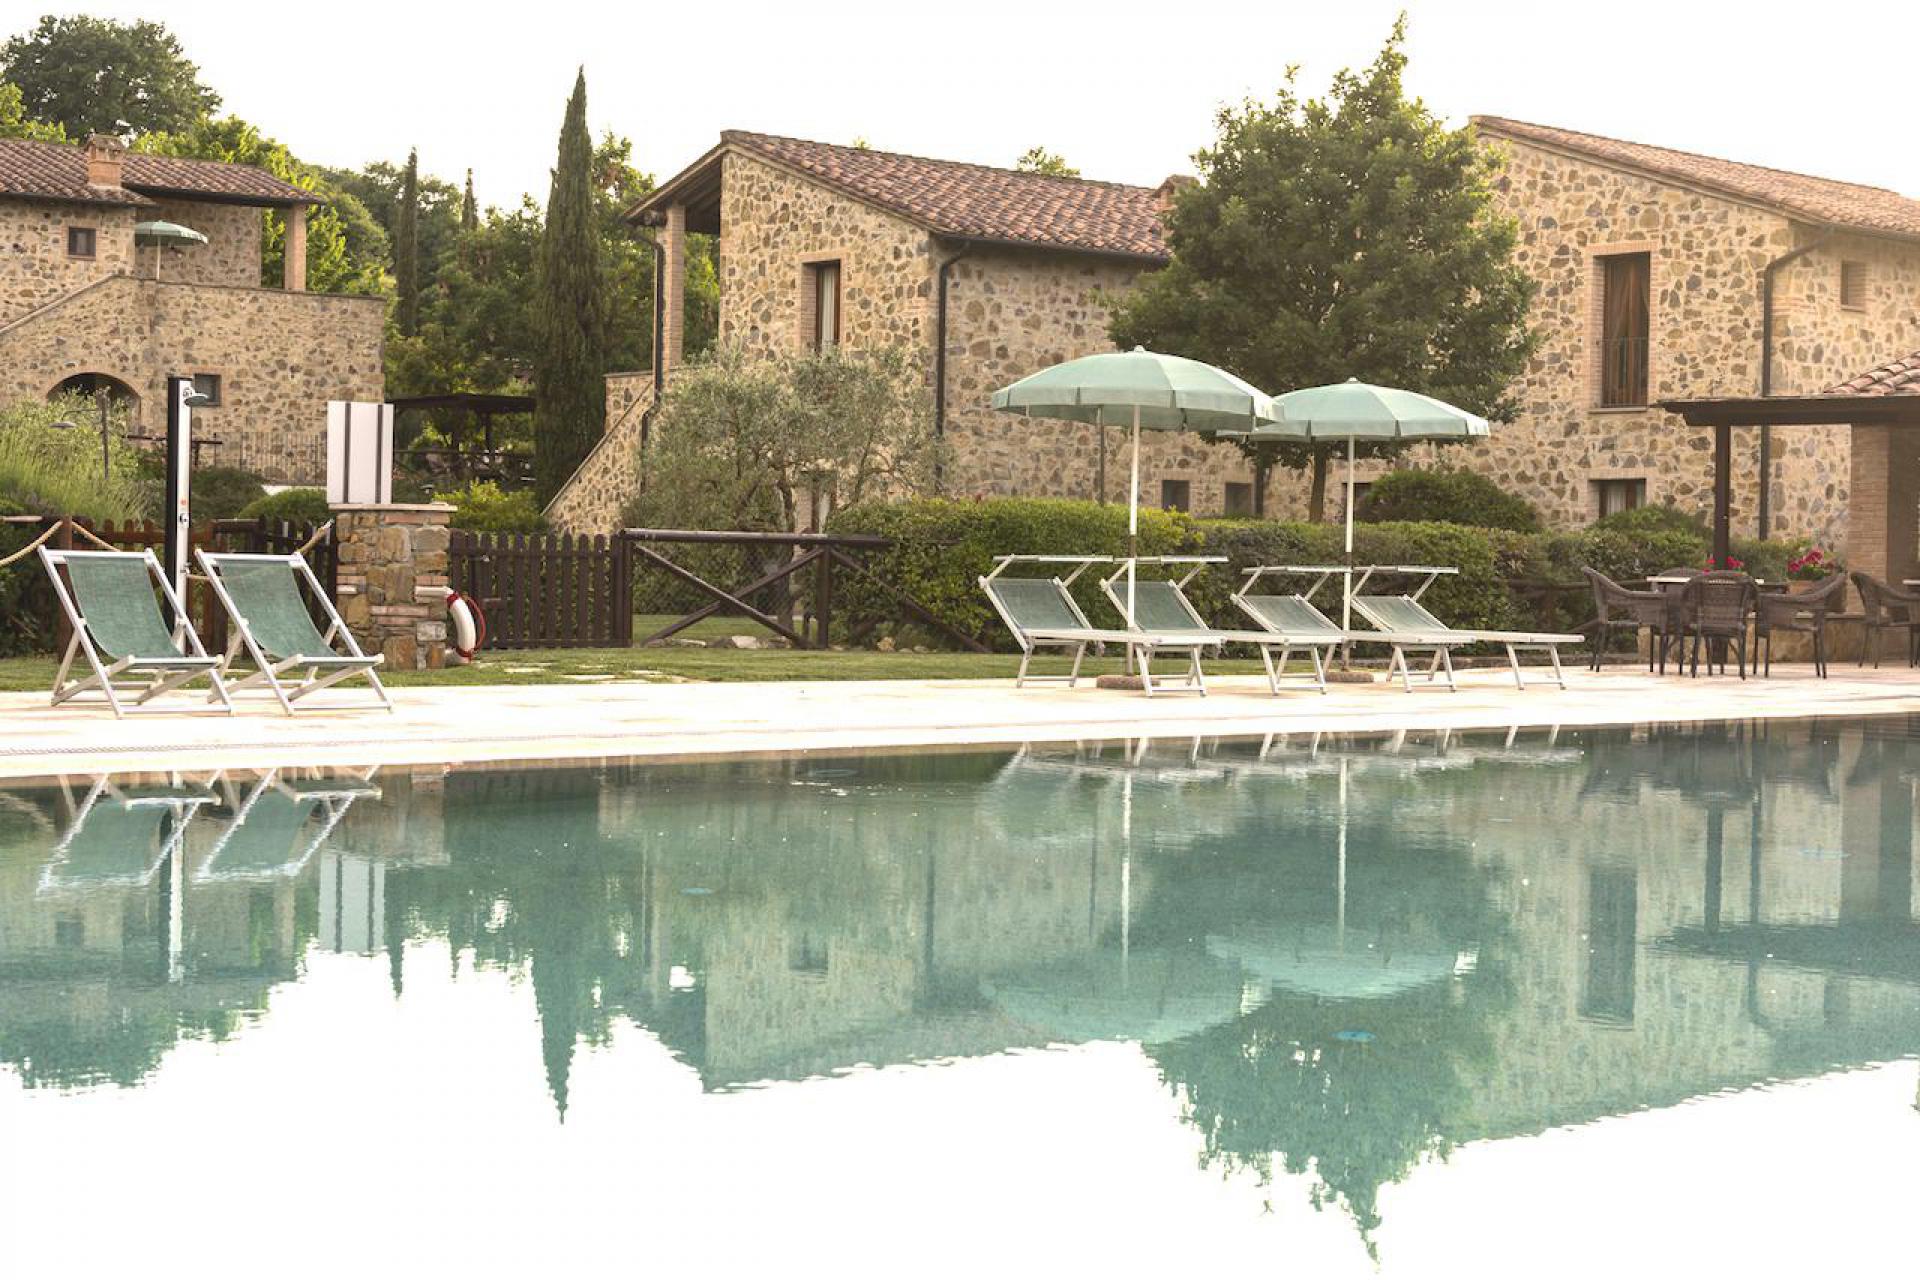 Agriturismo Toscana Resort di campagna in Toscana con bellissima piscina